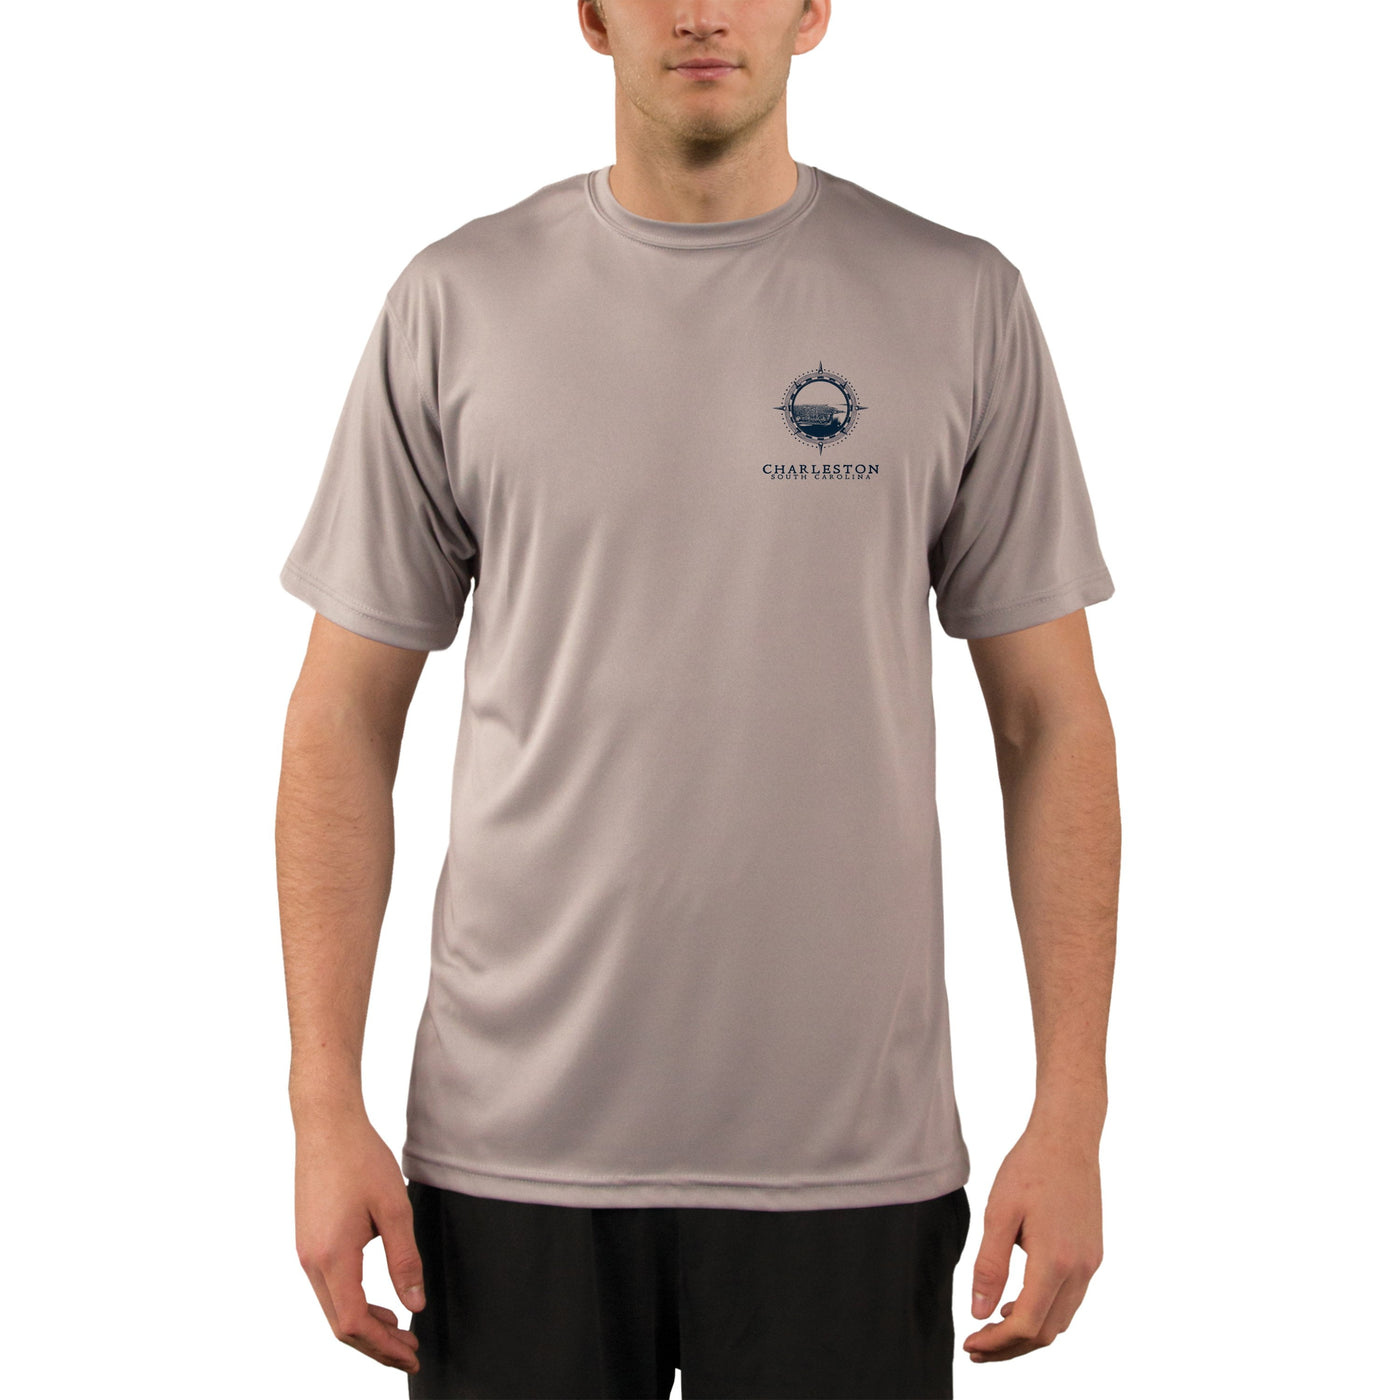 Compass Vintage Charleston Men's UPF 50+ Short Sleeve T-shirt